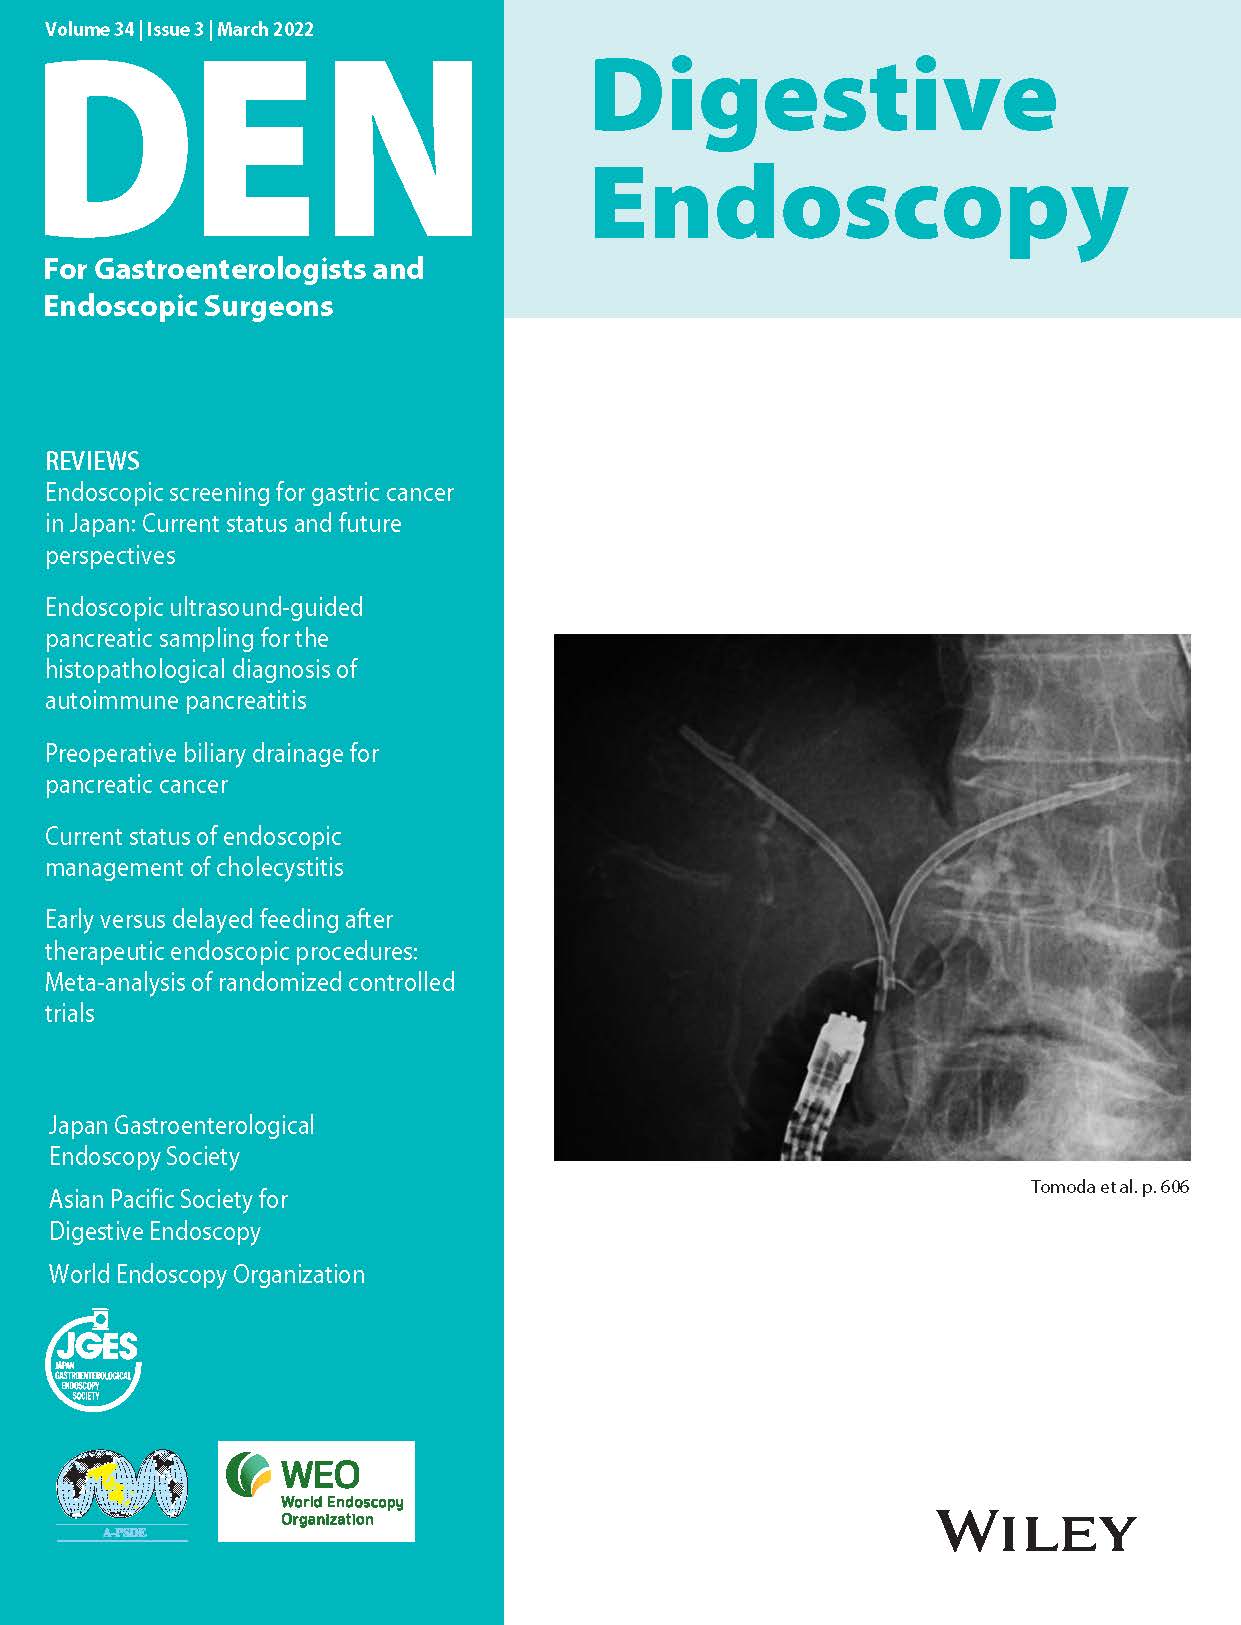 Digestive Endoscopy Vol34-3